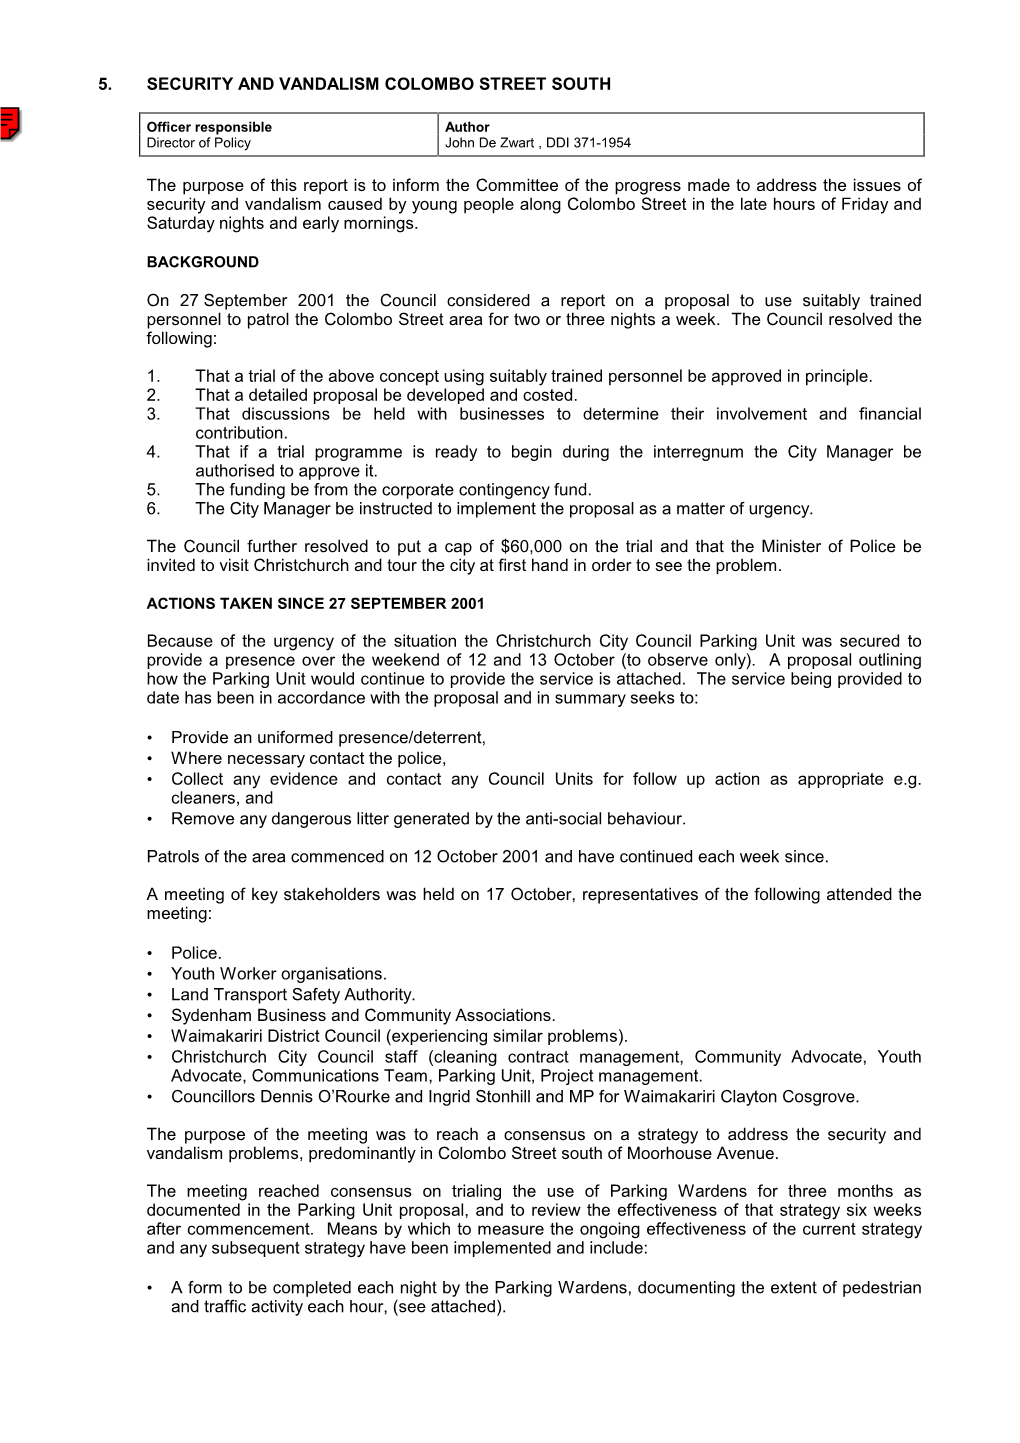 Community and Leisure Committee Agenda 26 November 2001